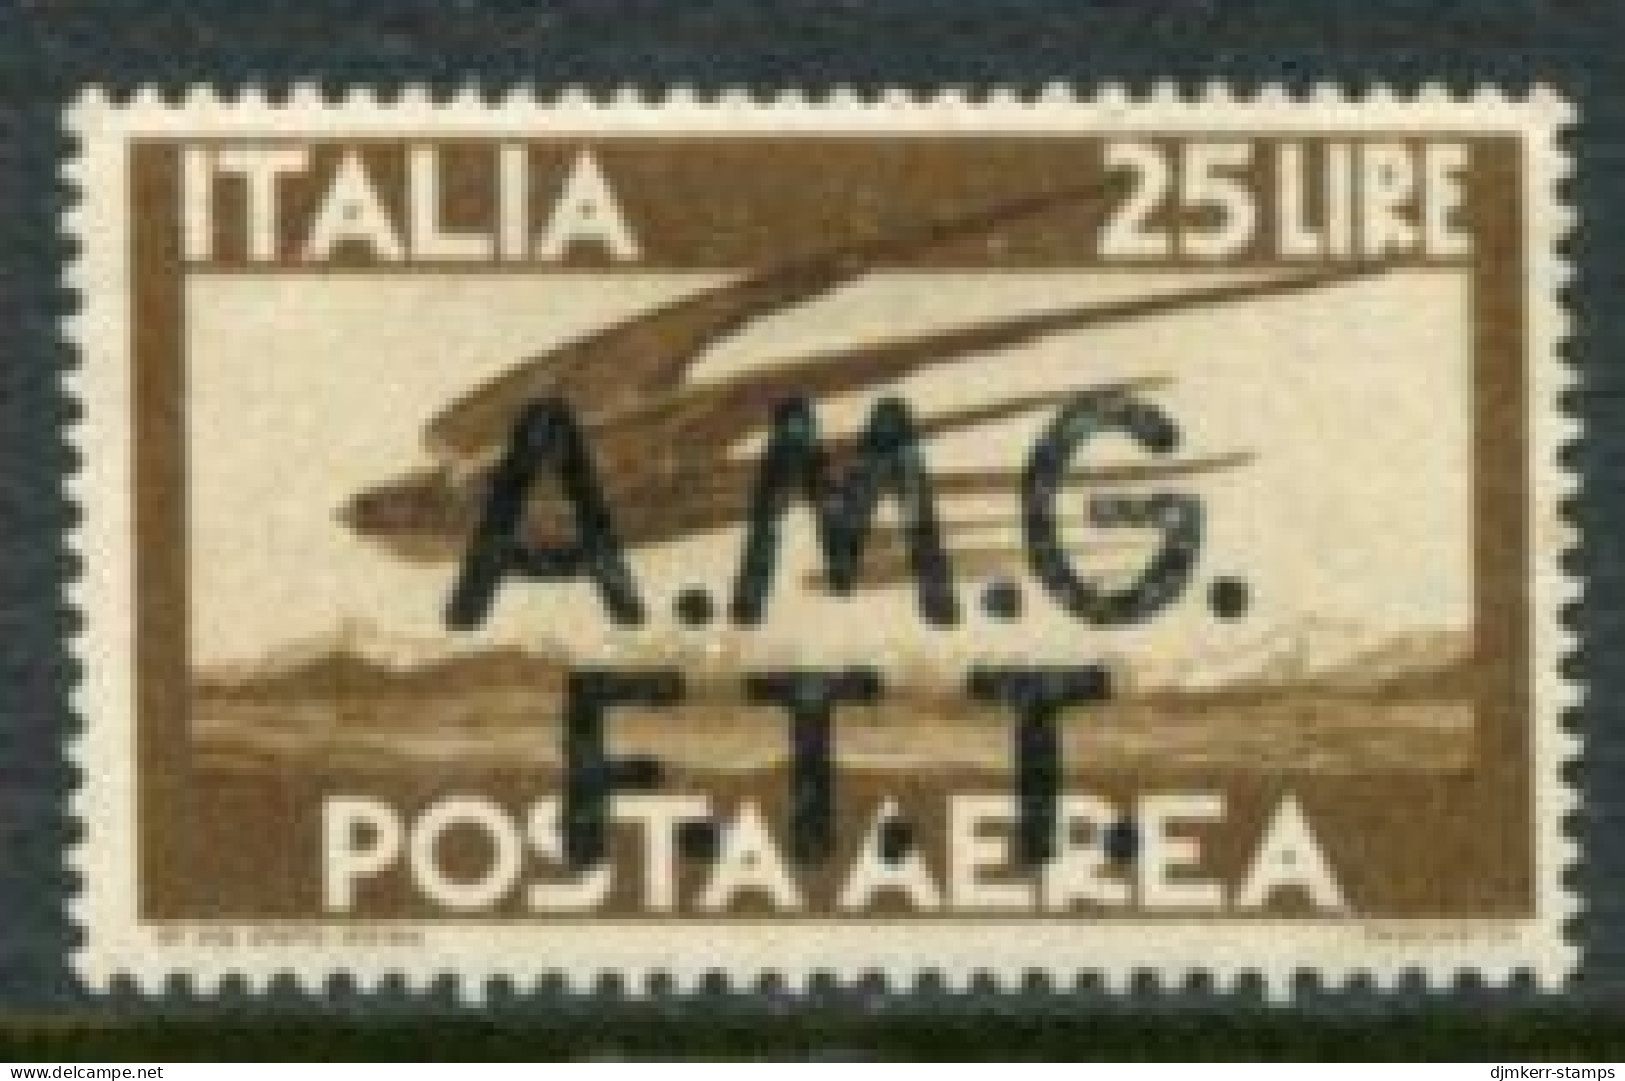 TRIESTE ZONE A 1947 Airmail 25 L. MNH / **  Michel 22 - Ungebraucht